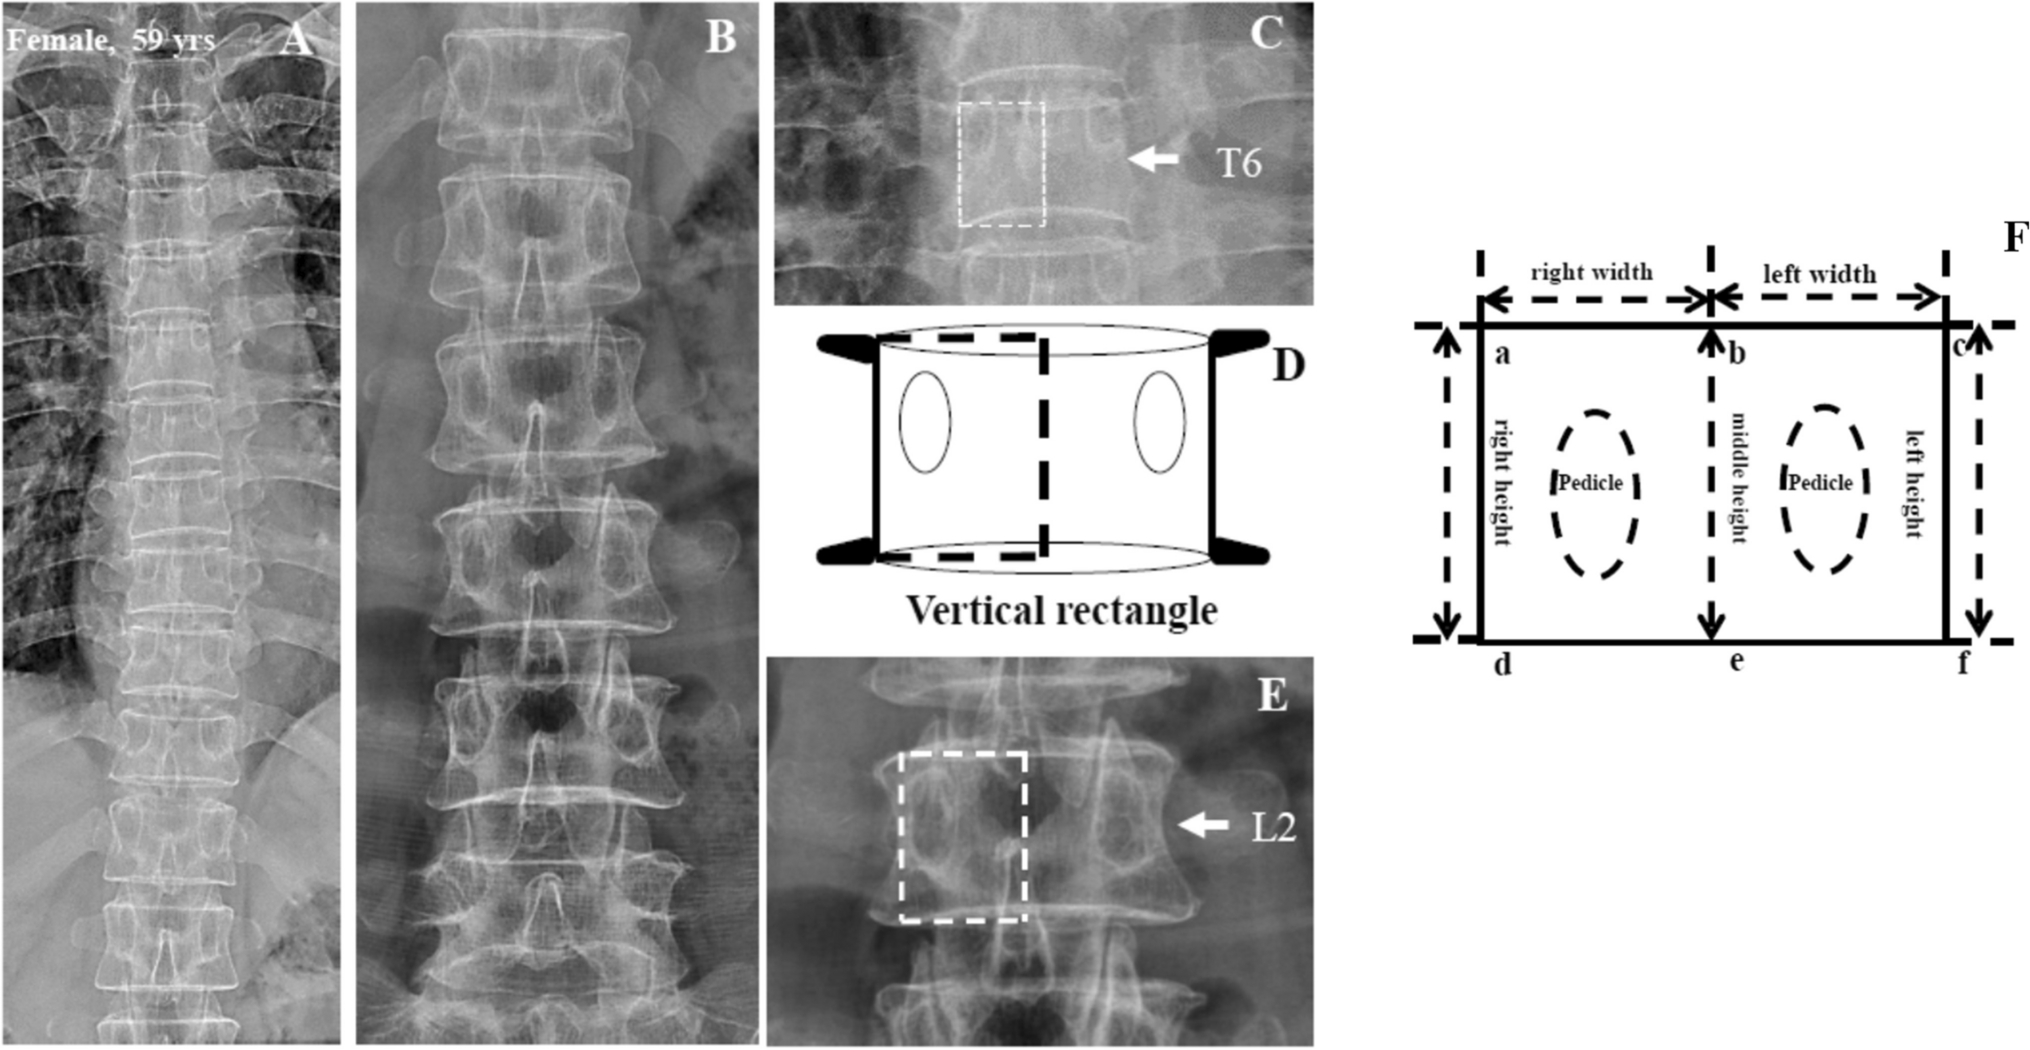 Vertebral fracture severity assessment on anteroposterior radiographs with a new semi-quantitative technique